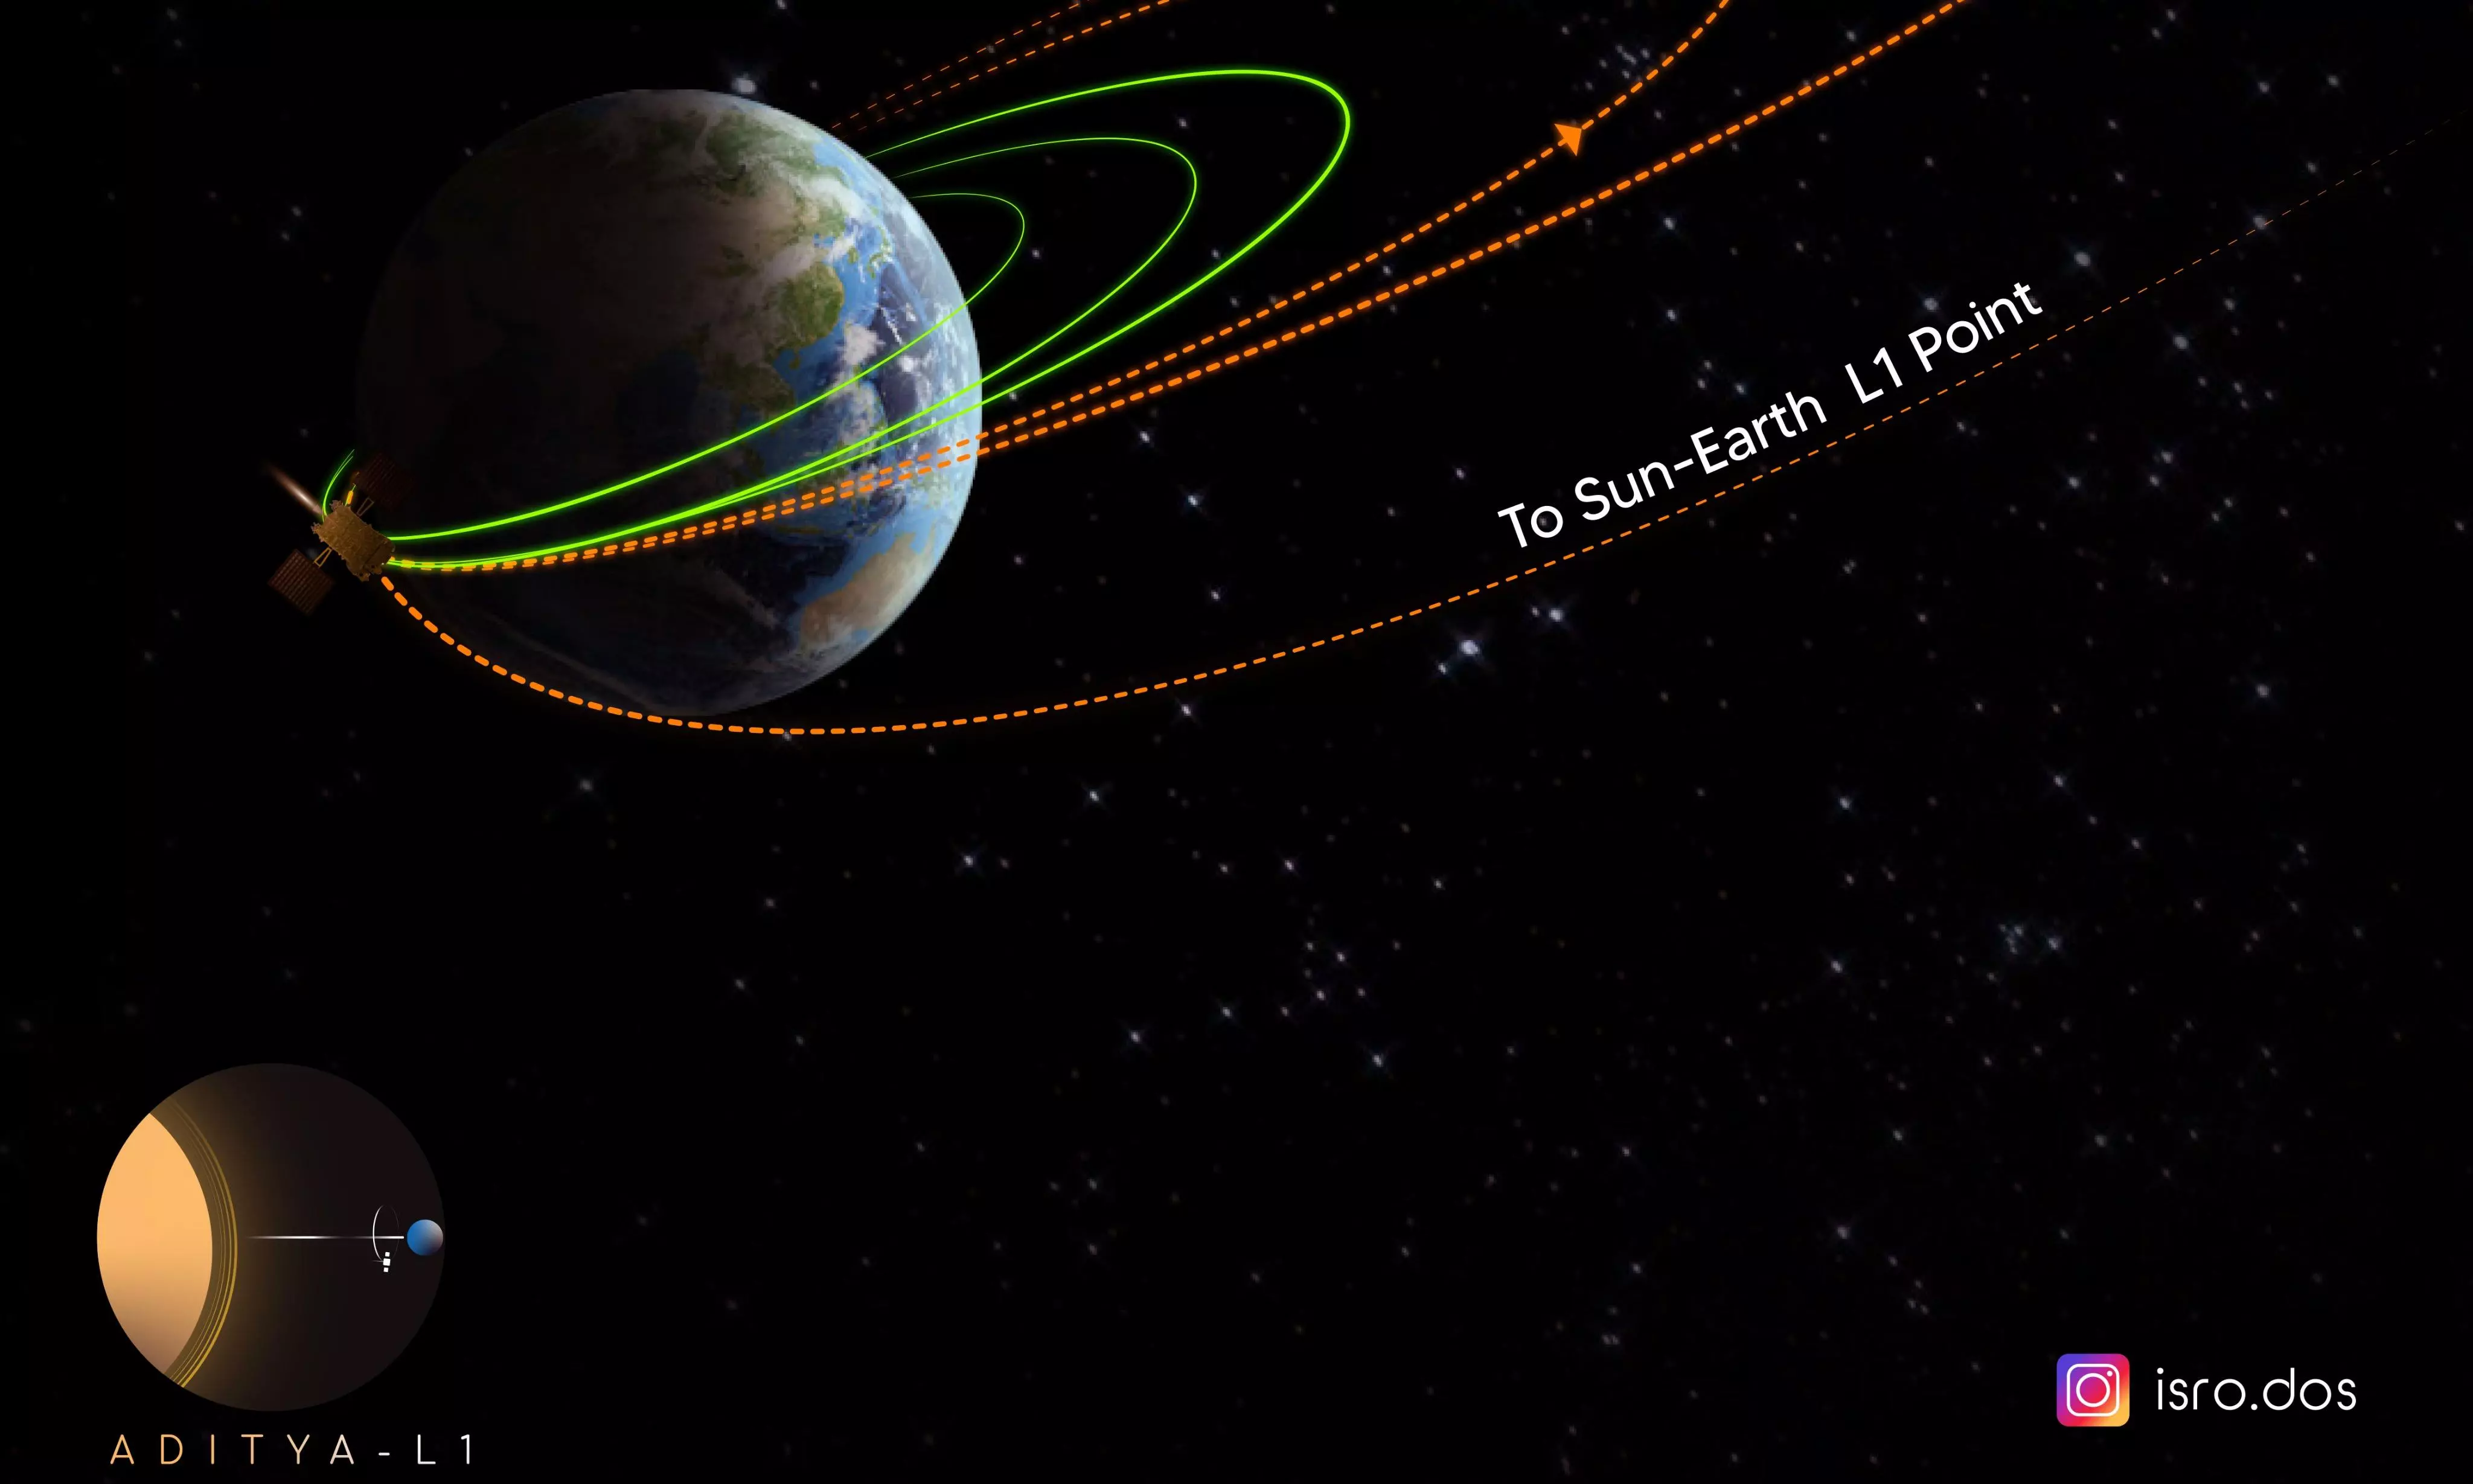 Mission Sun: Aditya L1 successfully undergoes third earth-bound manoeuvre, says ISRO